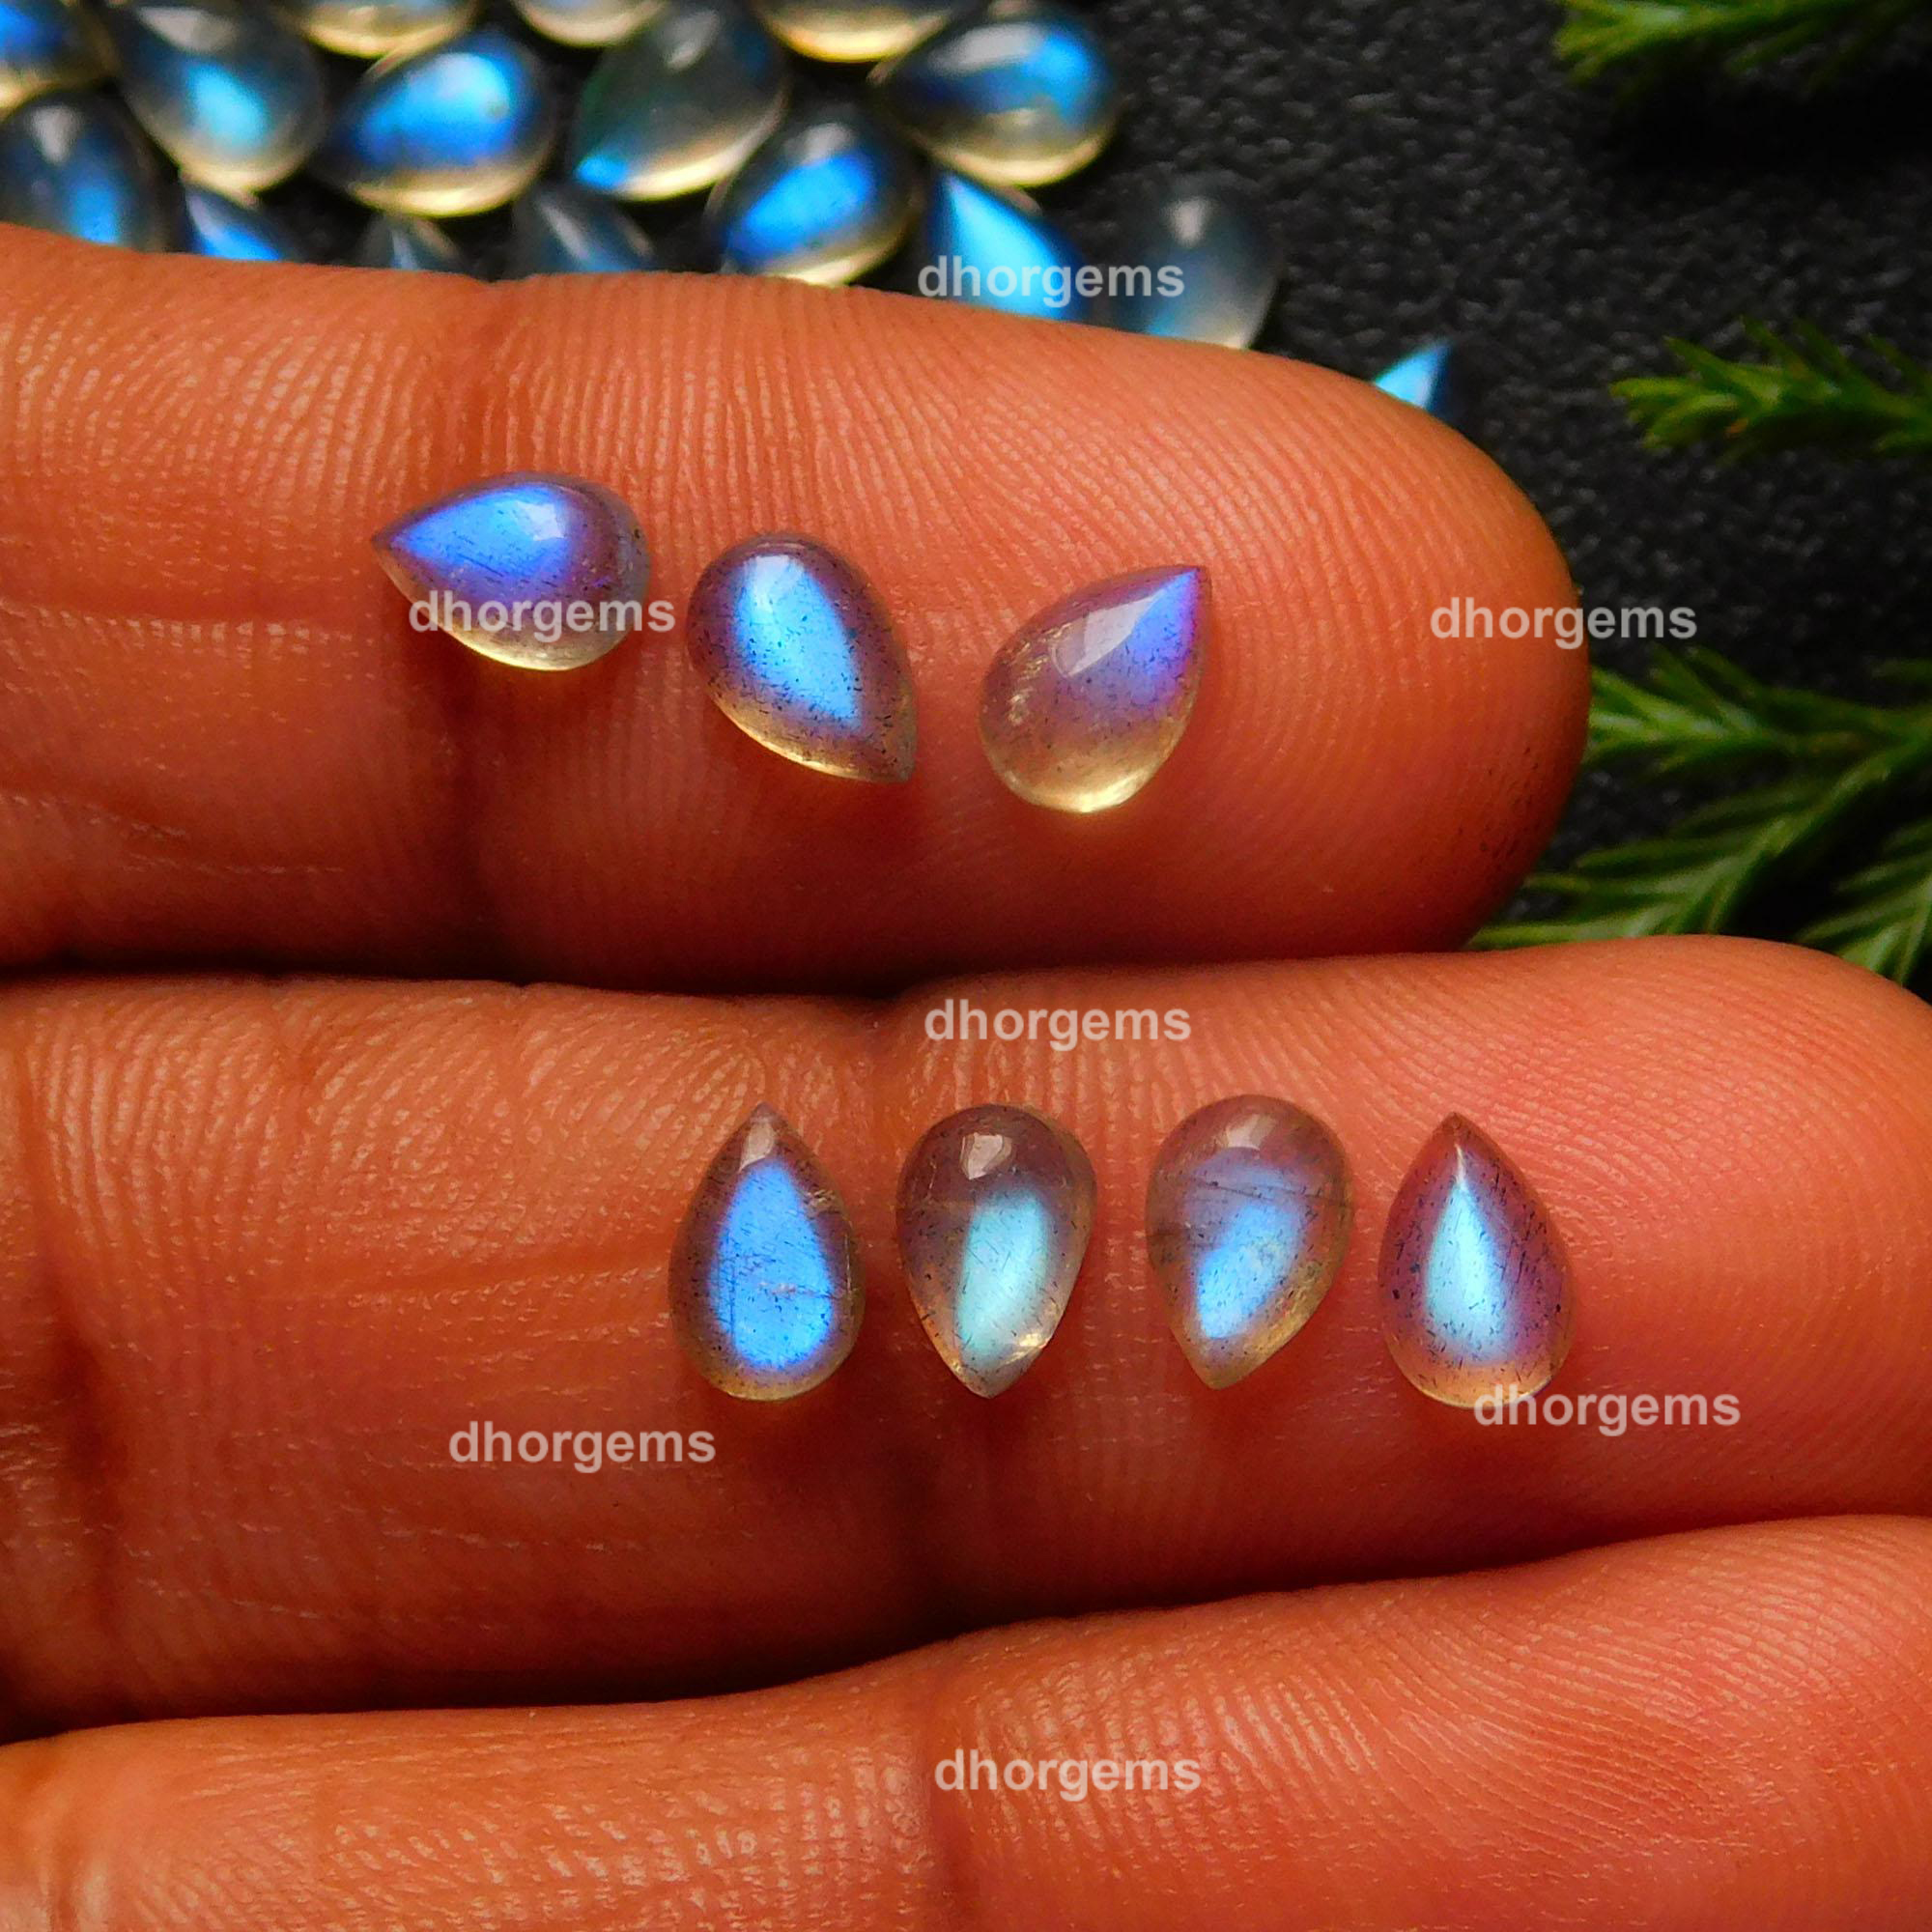 73Pcs 34.9Cts Natural Blue Fire Labradorite Loose Cabochon Calibrated Pear Shape Gemstone Lot 4x6mm#9250